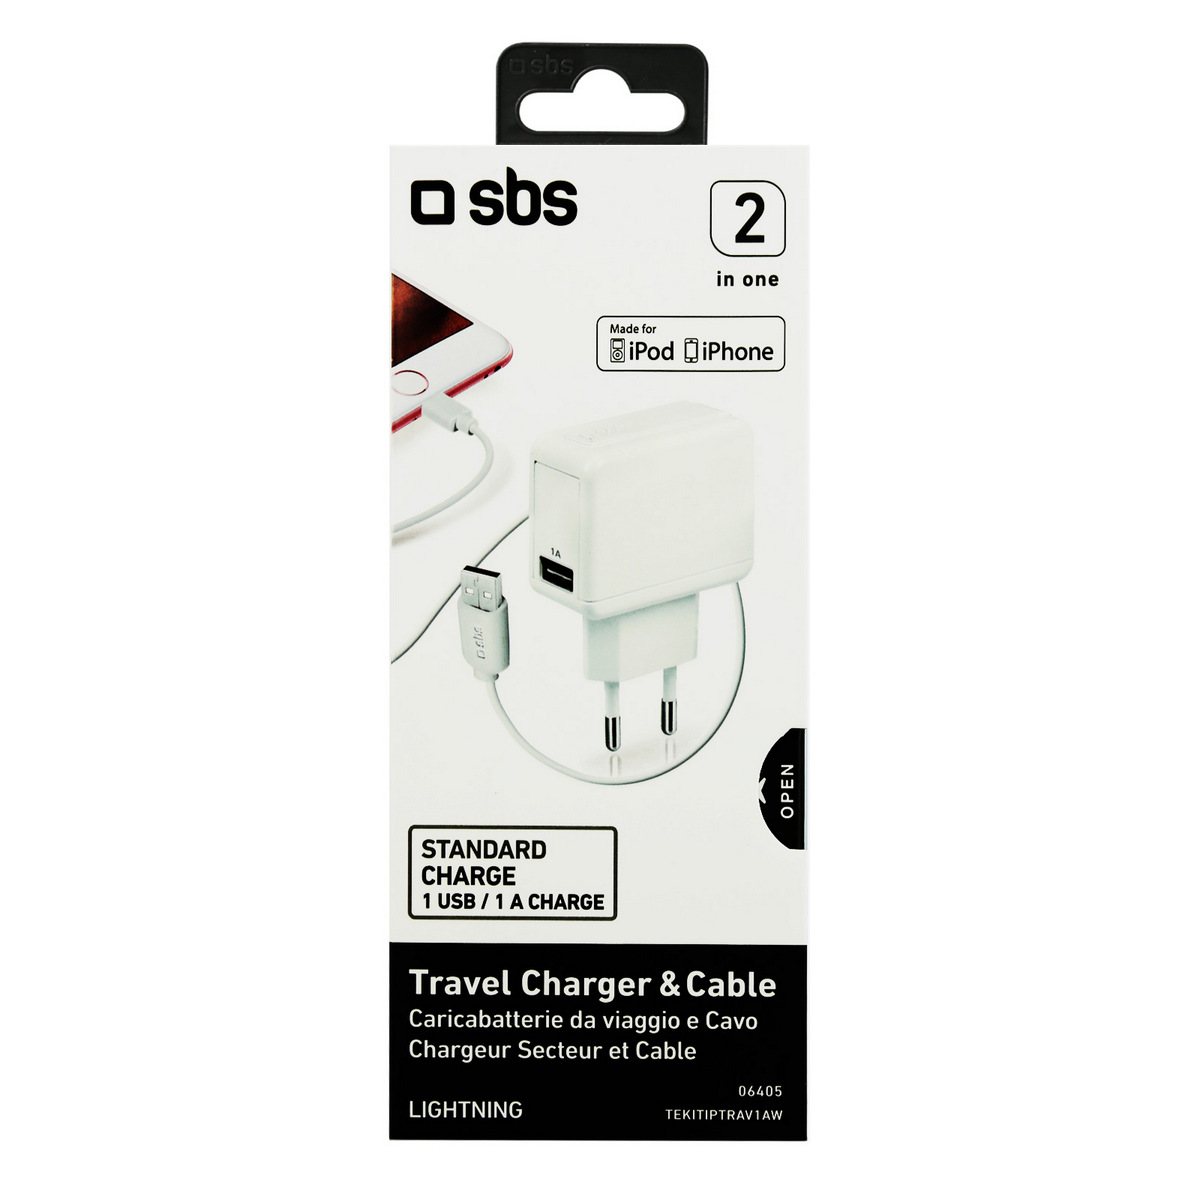 SBS CHARGER KIT WITH USB TRAVEL CHARGER 2 OUTPUT 1.000 MA + USB DATA CABLE, TEKITIPTRAV1AW